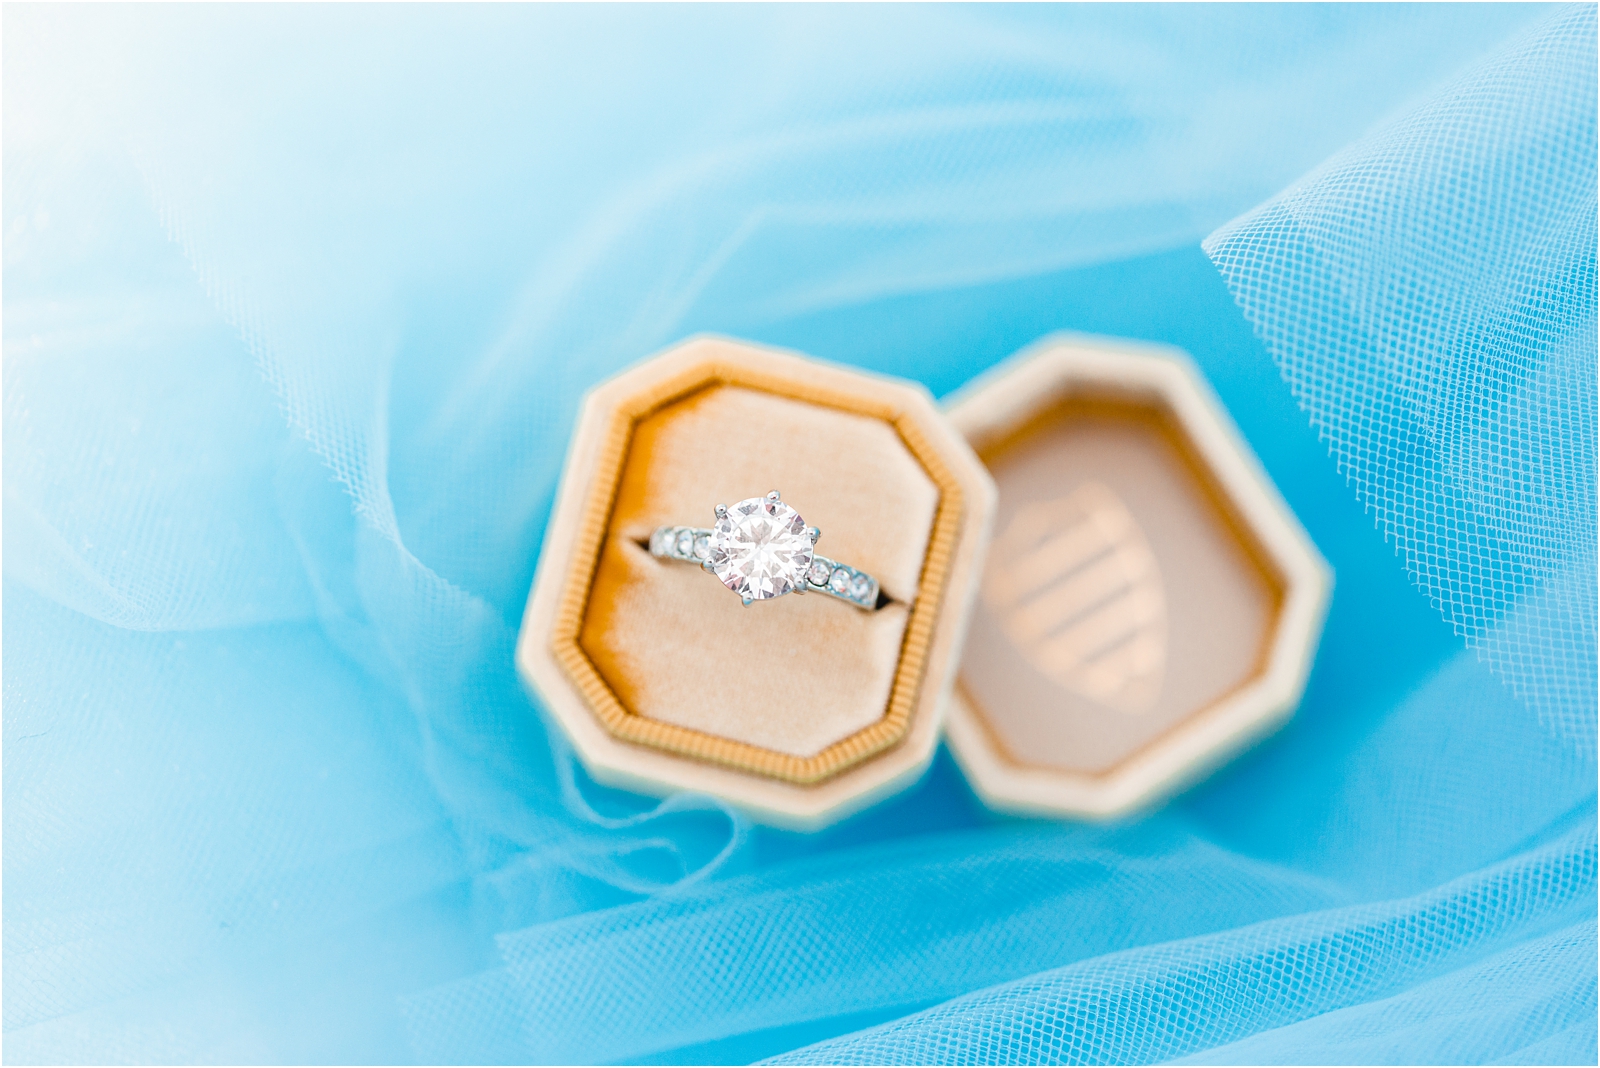 Winter Wedding in Idaho wedding ring in Mrs. Box velvet ring box on her blue chiffon wedding dress